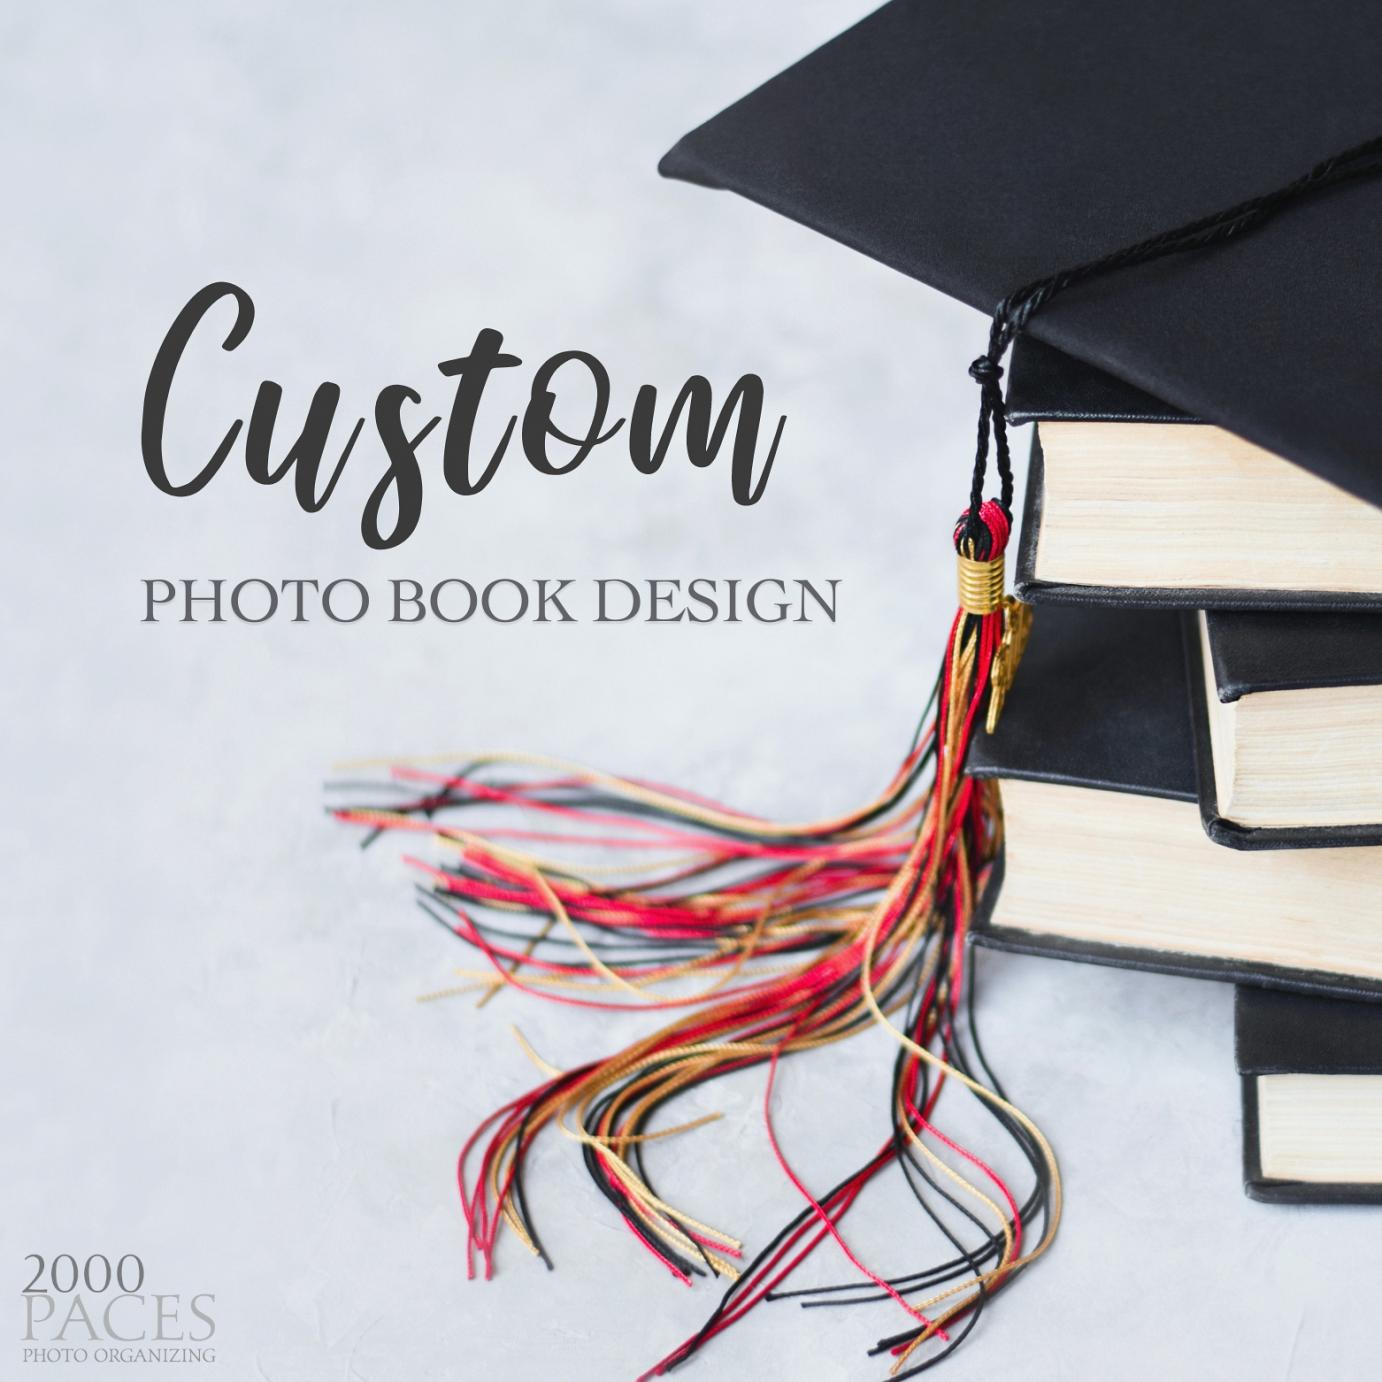 Graduation Photo Book